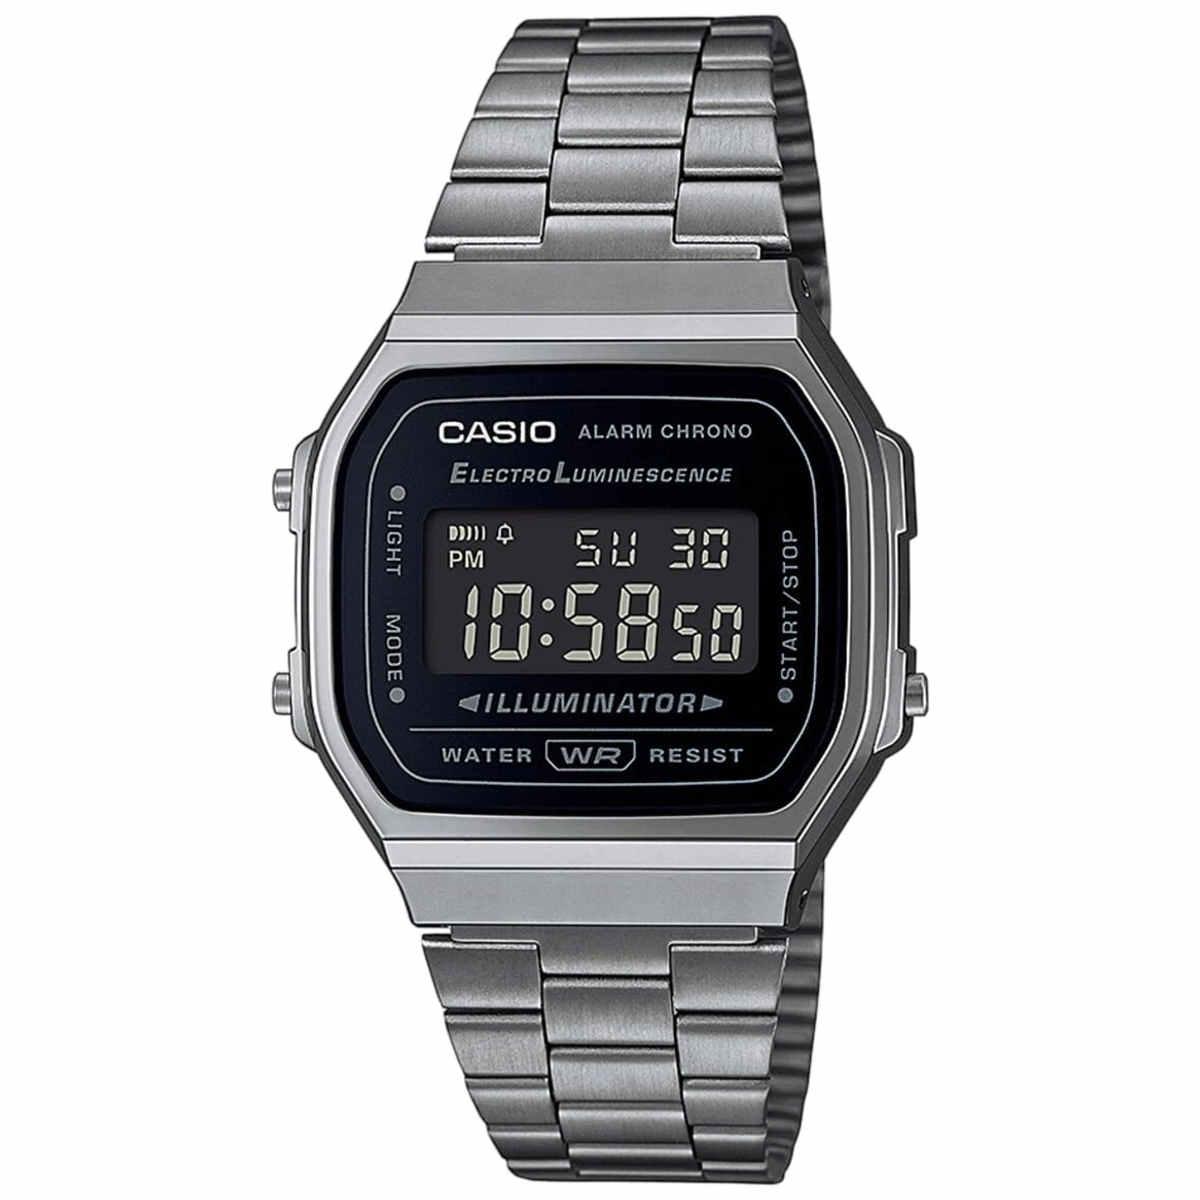 CASIO Collection Watch A168WEGG1BEF